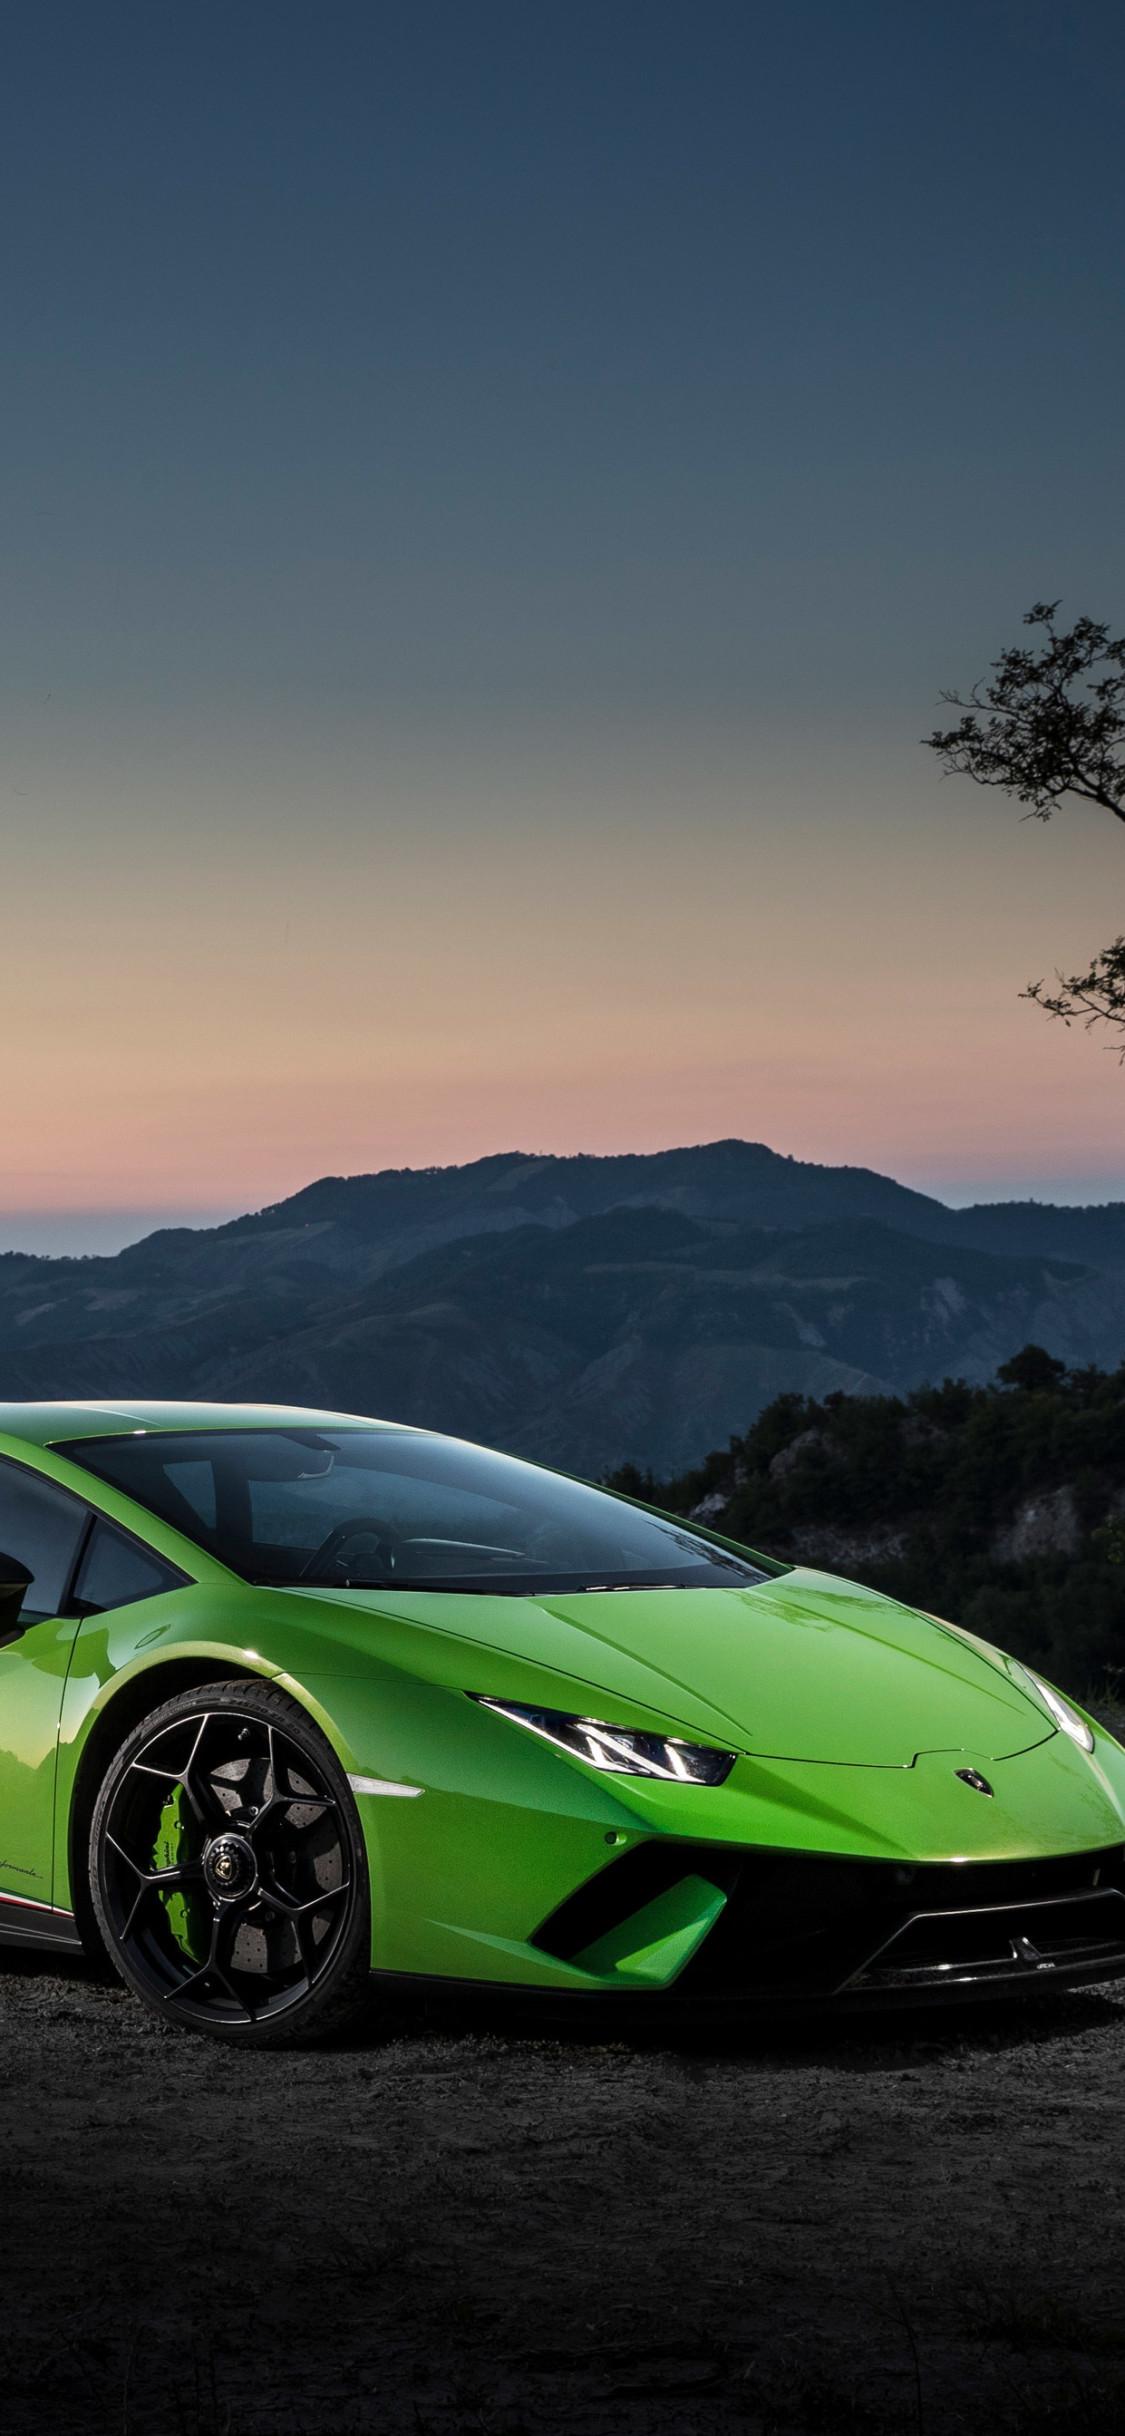 4k Lamborghini Huracan Performante iPhone XS, iPhone 10